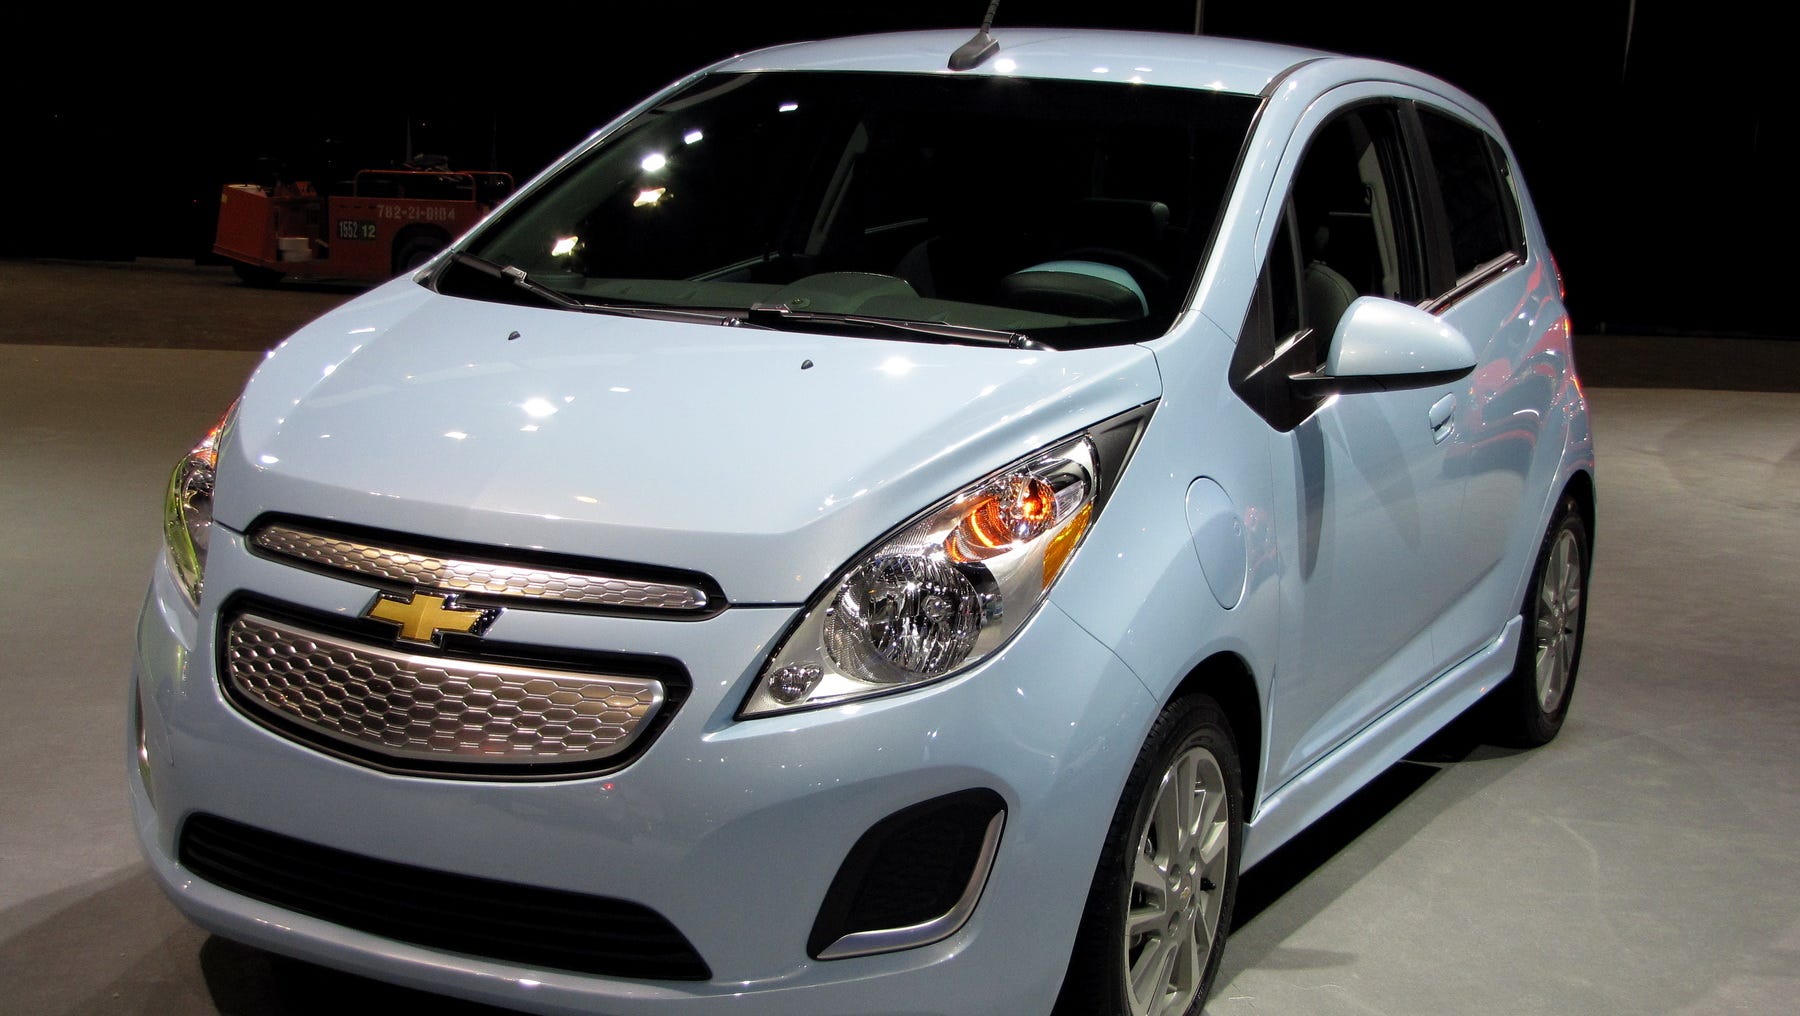 2014 Chevrolet Spark EV is efficiently urban